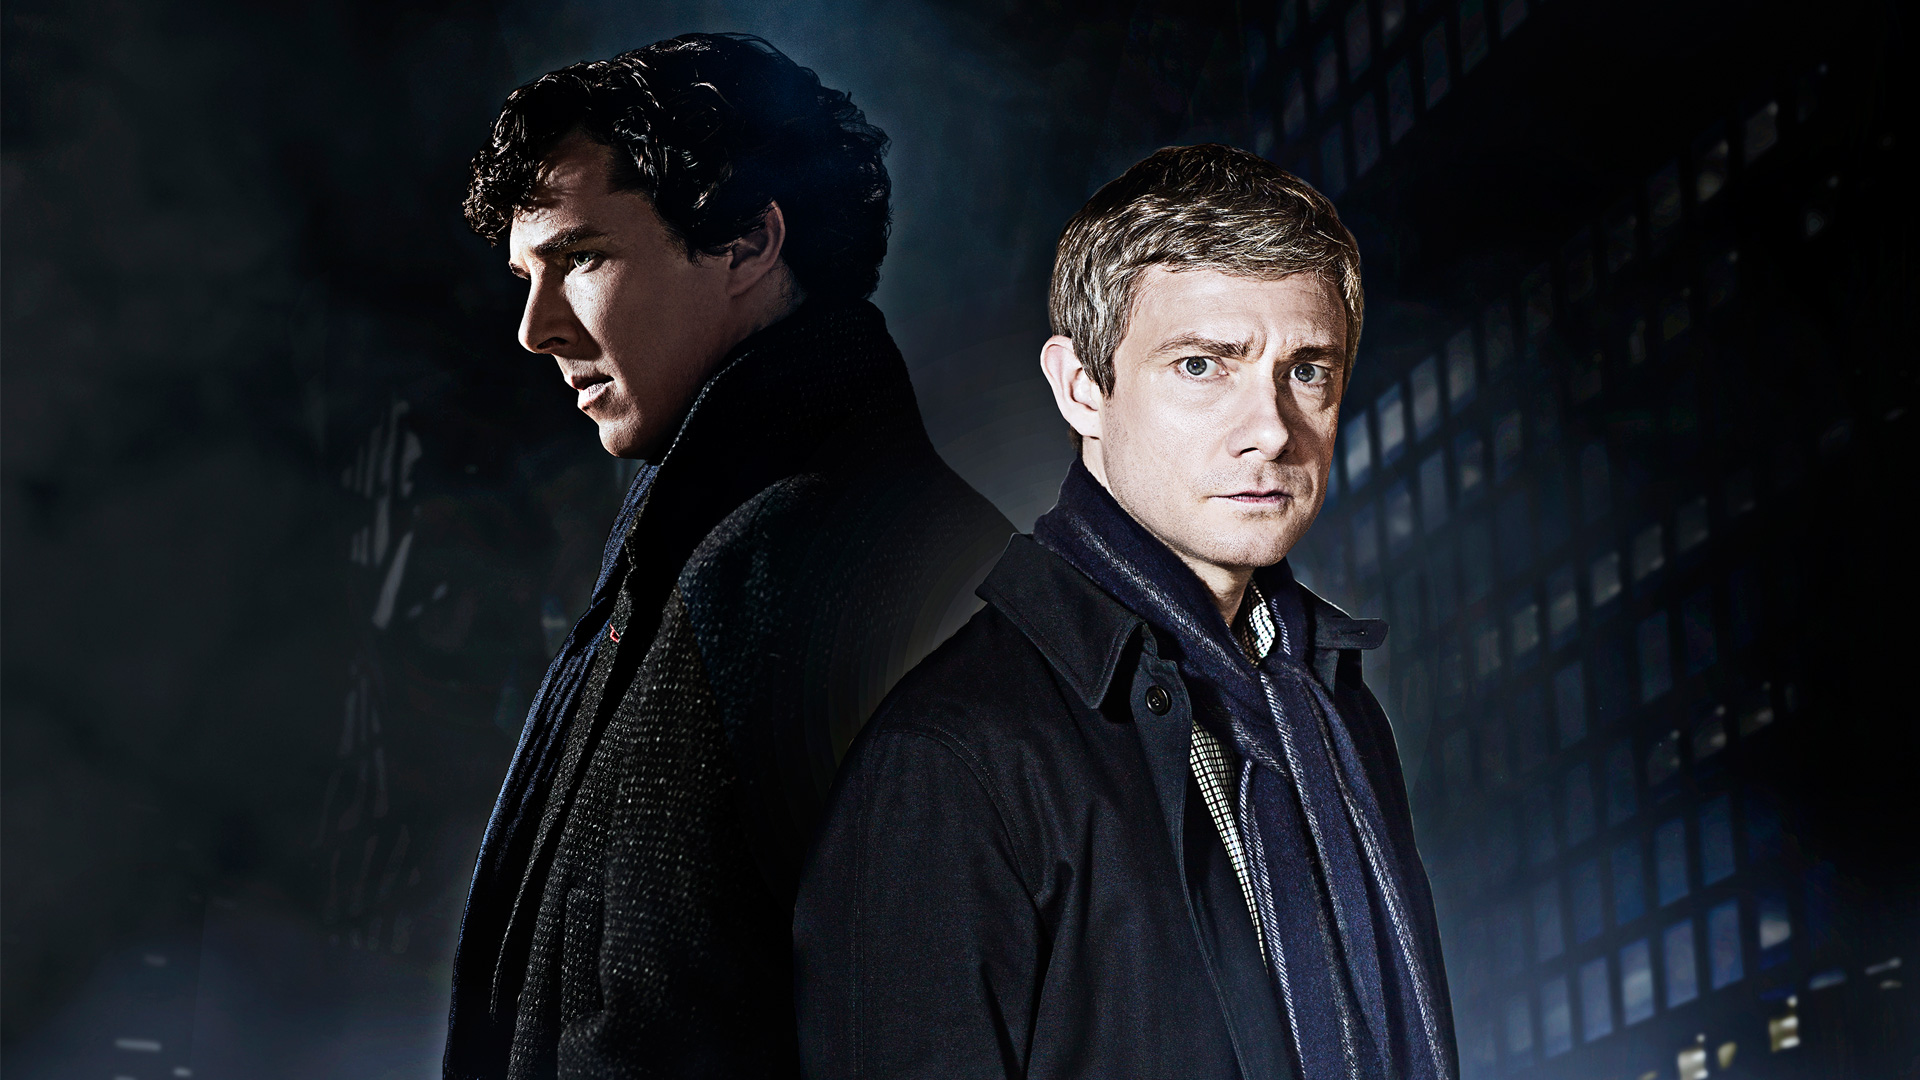 Benedict Cumberbatch and Martin Freeman in "Sherlock" (Photo: Hartswood FIlms for Masterpiece)